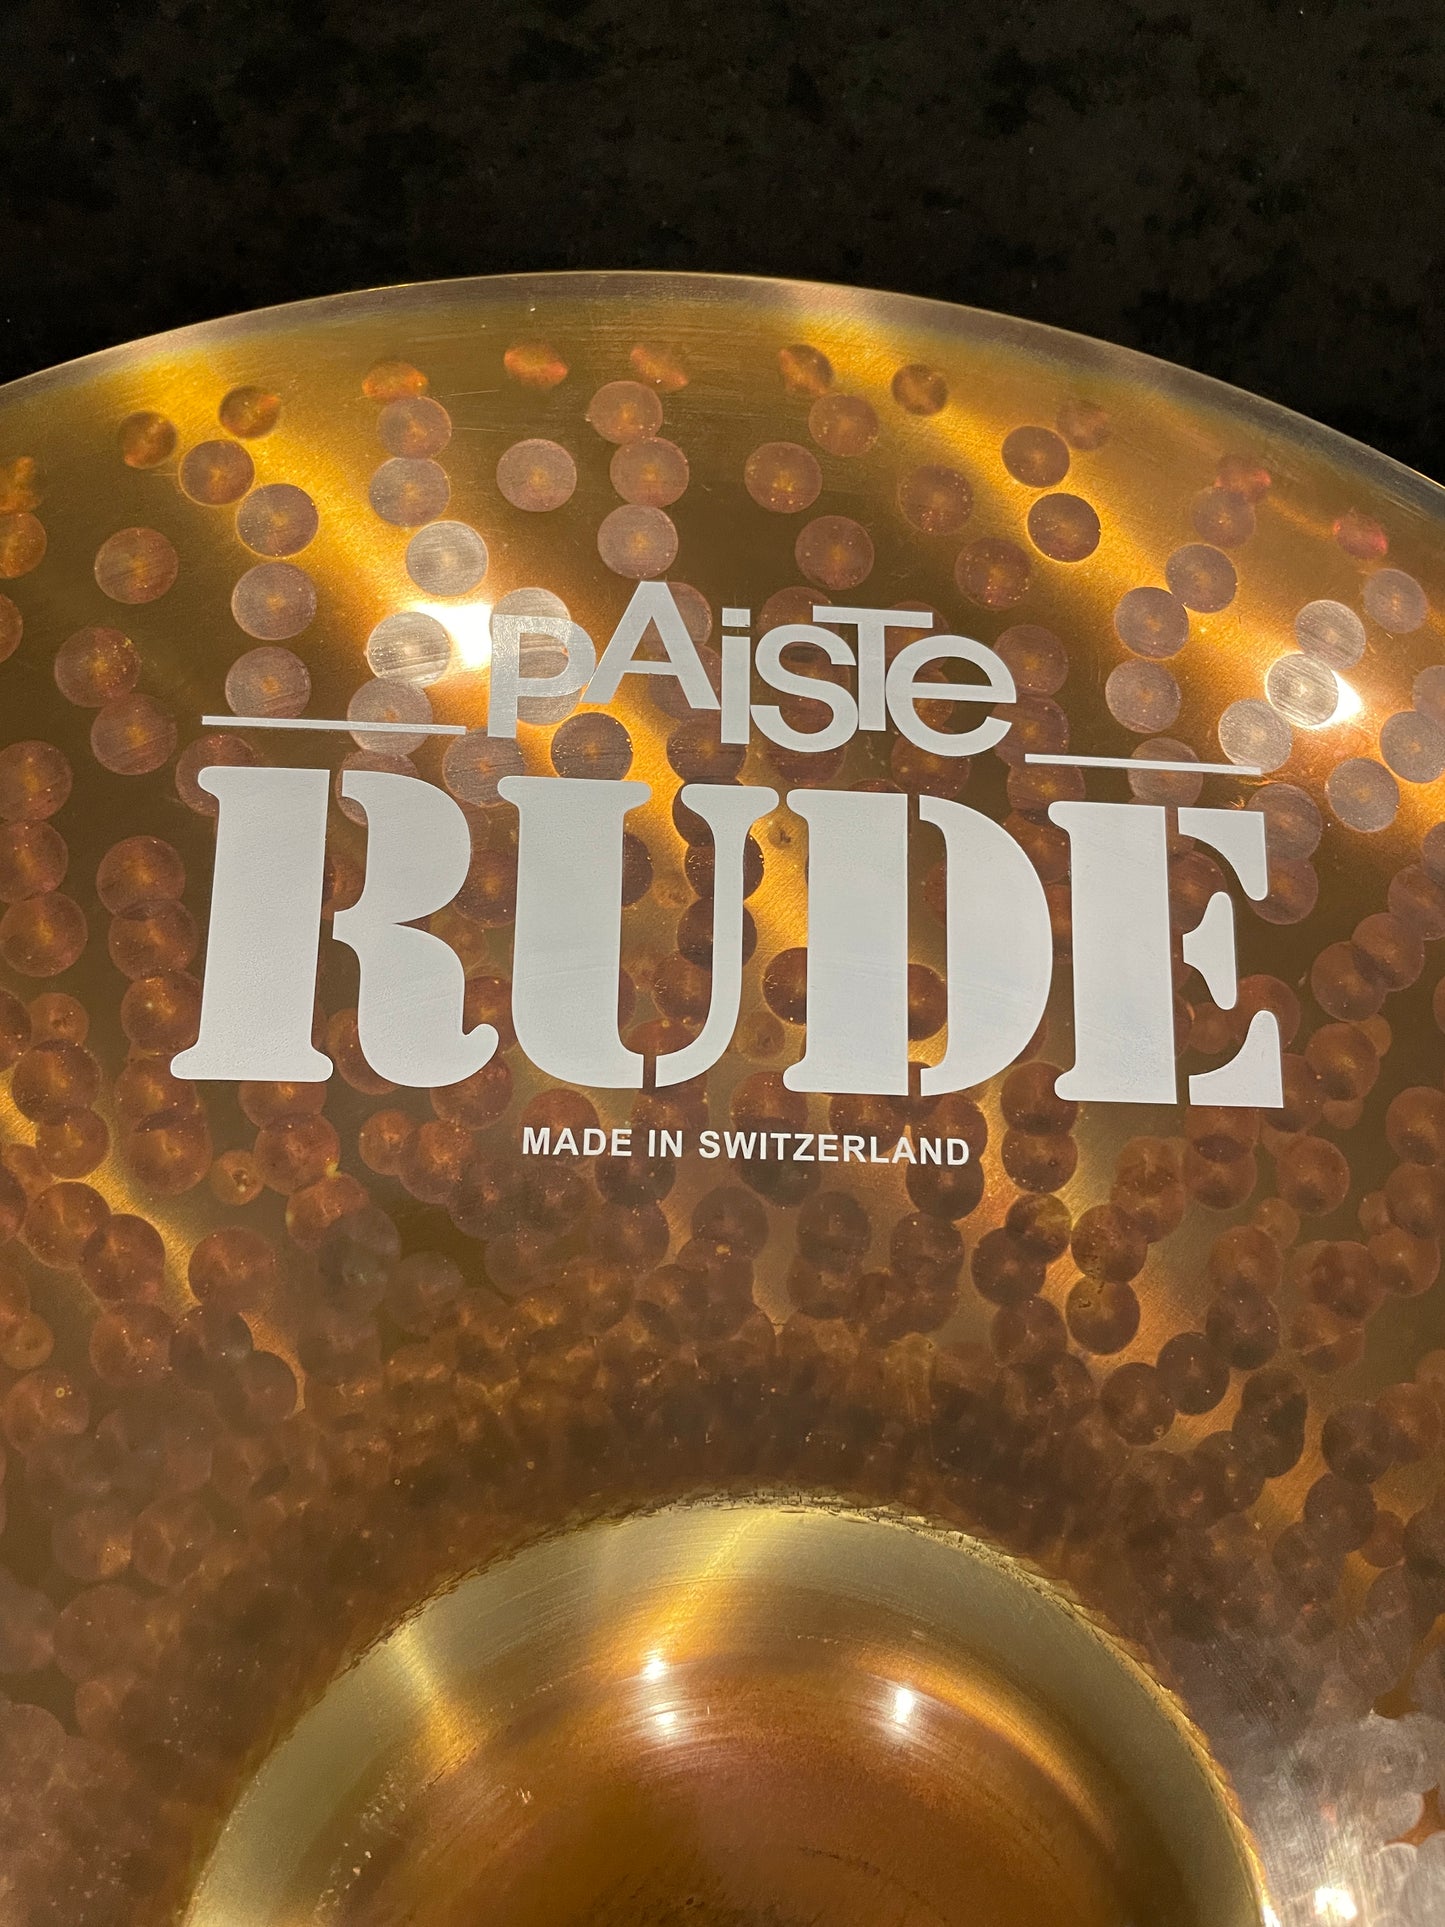 19" Paiste Rude Thin Crash Cymbal 1810g